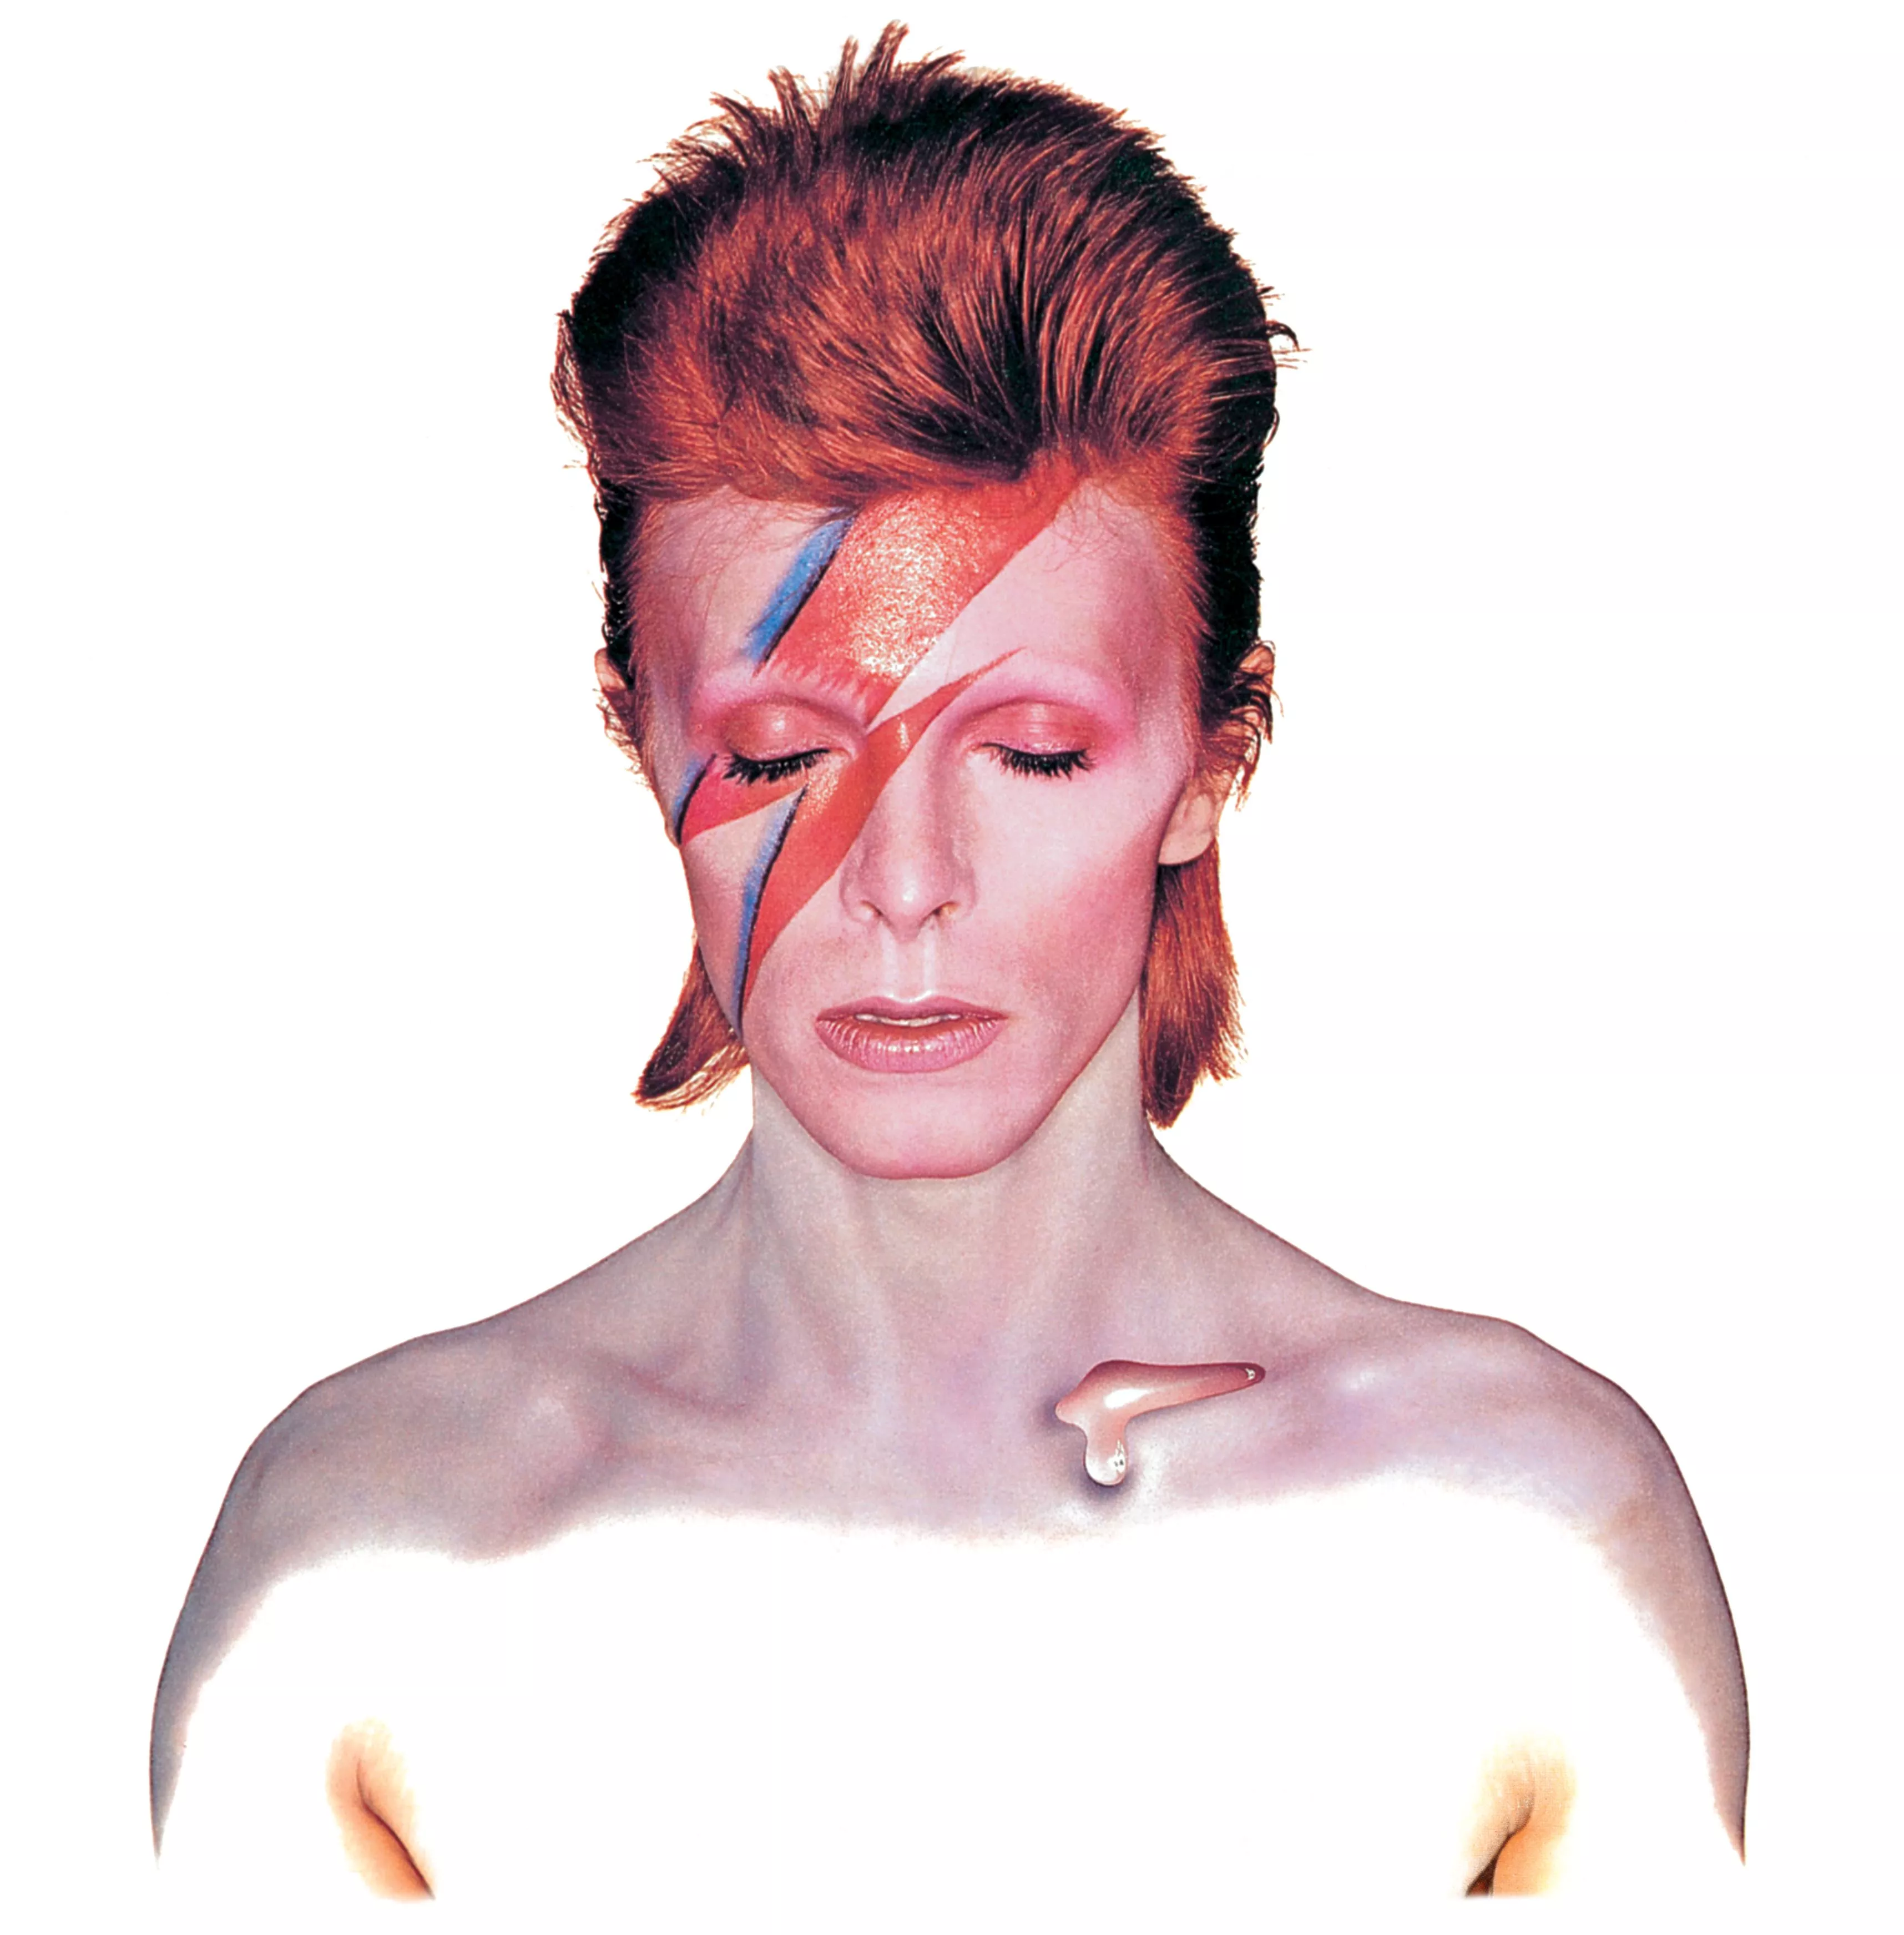 Fotogalleri: David Bowie gennem 40 år